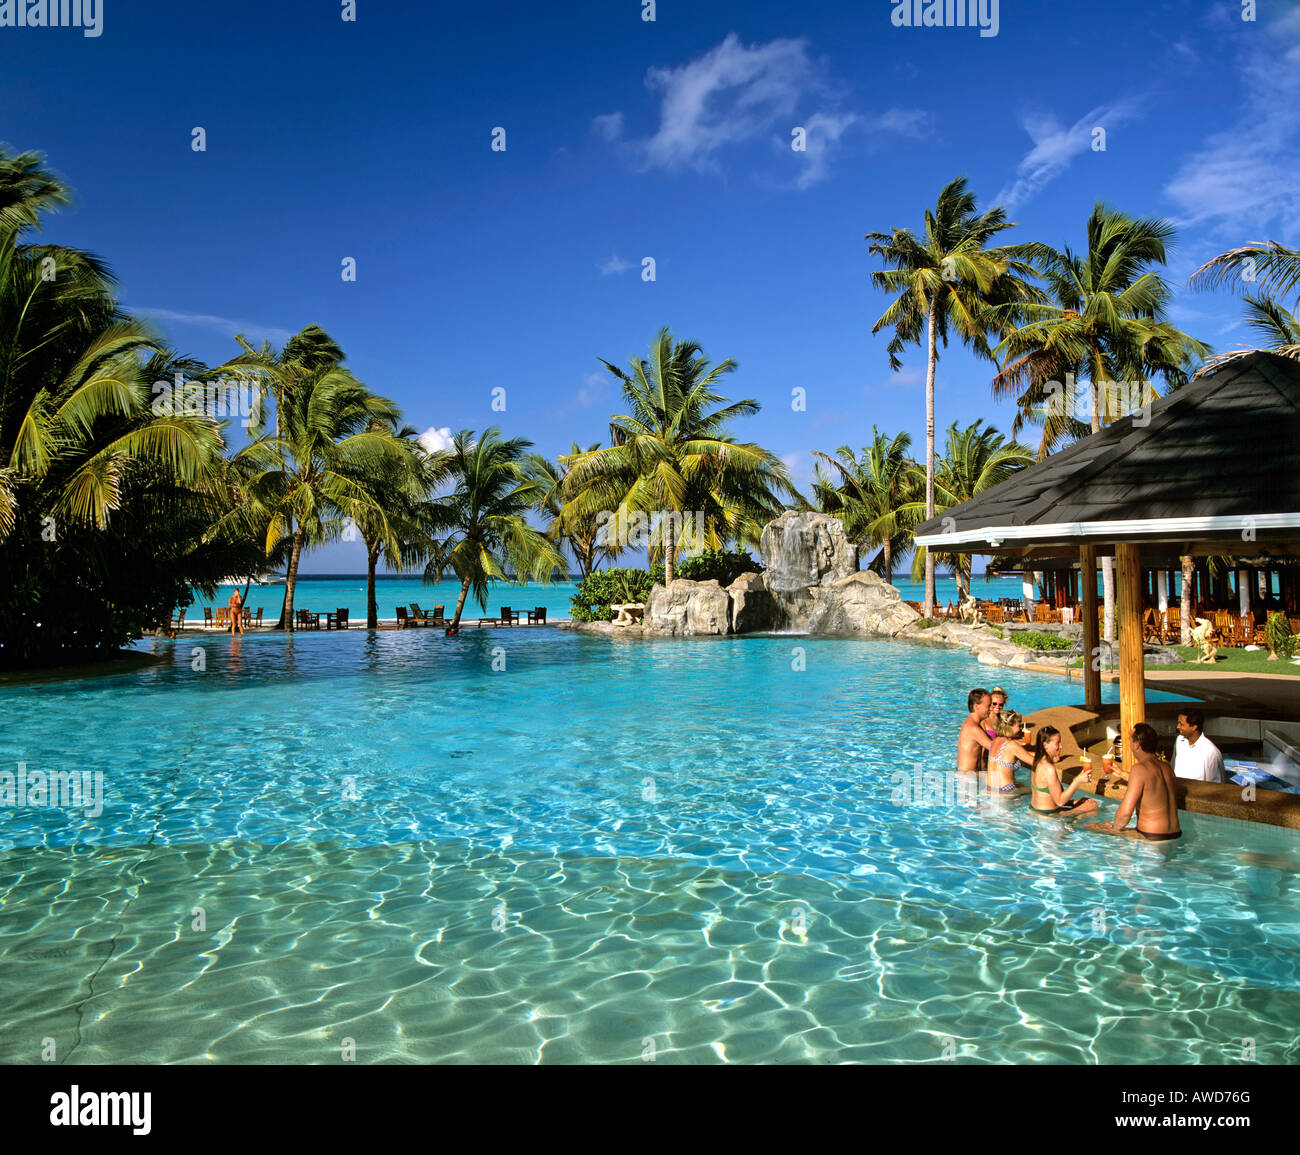 Swimming pool, pool bar, ocean and palm trees, Sun Island, Ari Atoll, Maldives, Indian Ocean Stock Photo